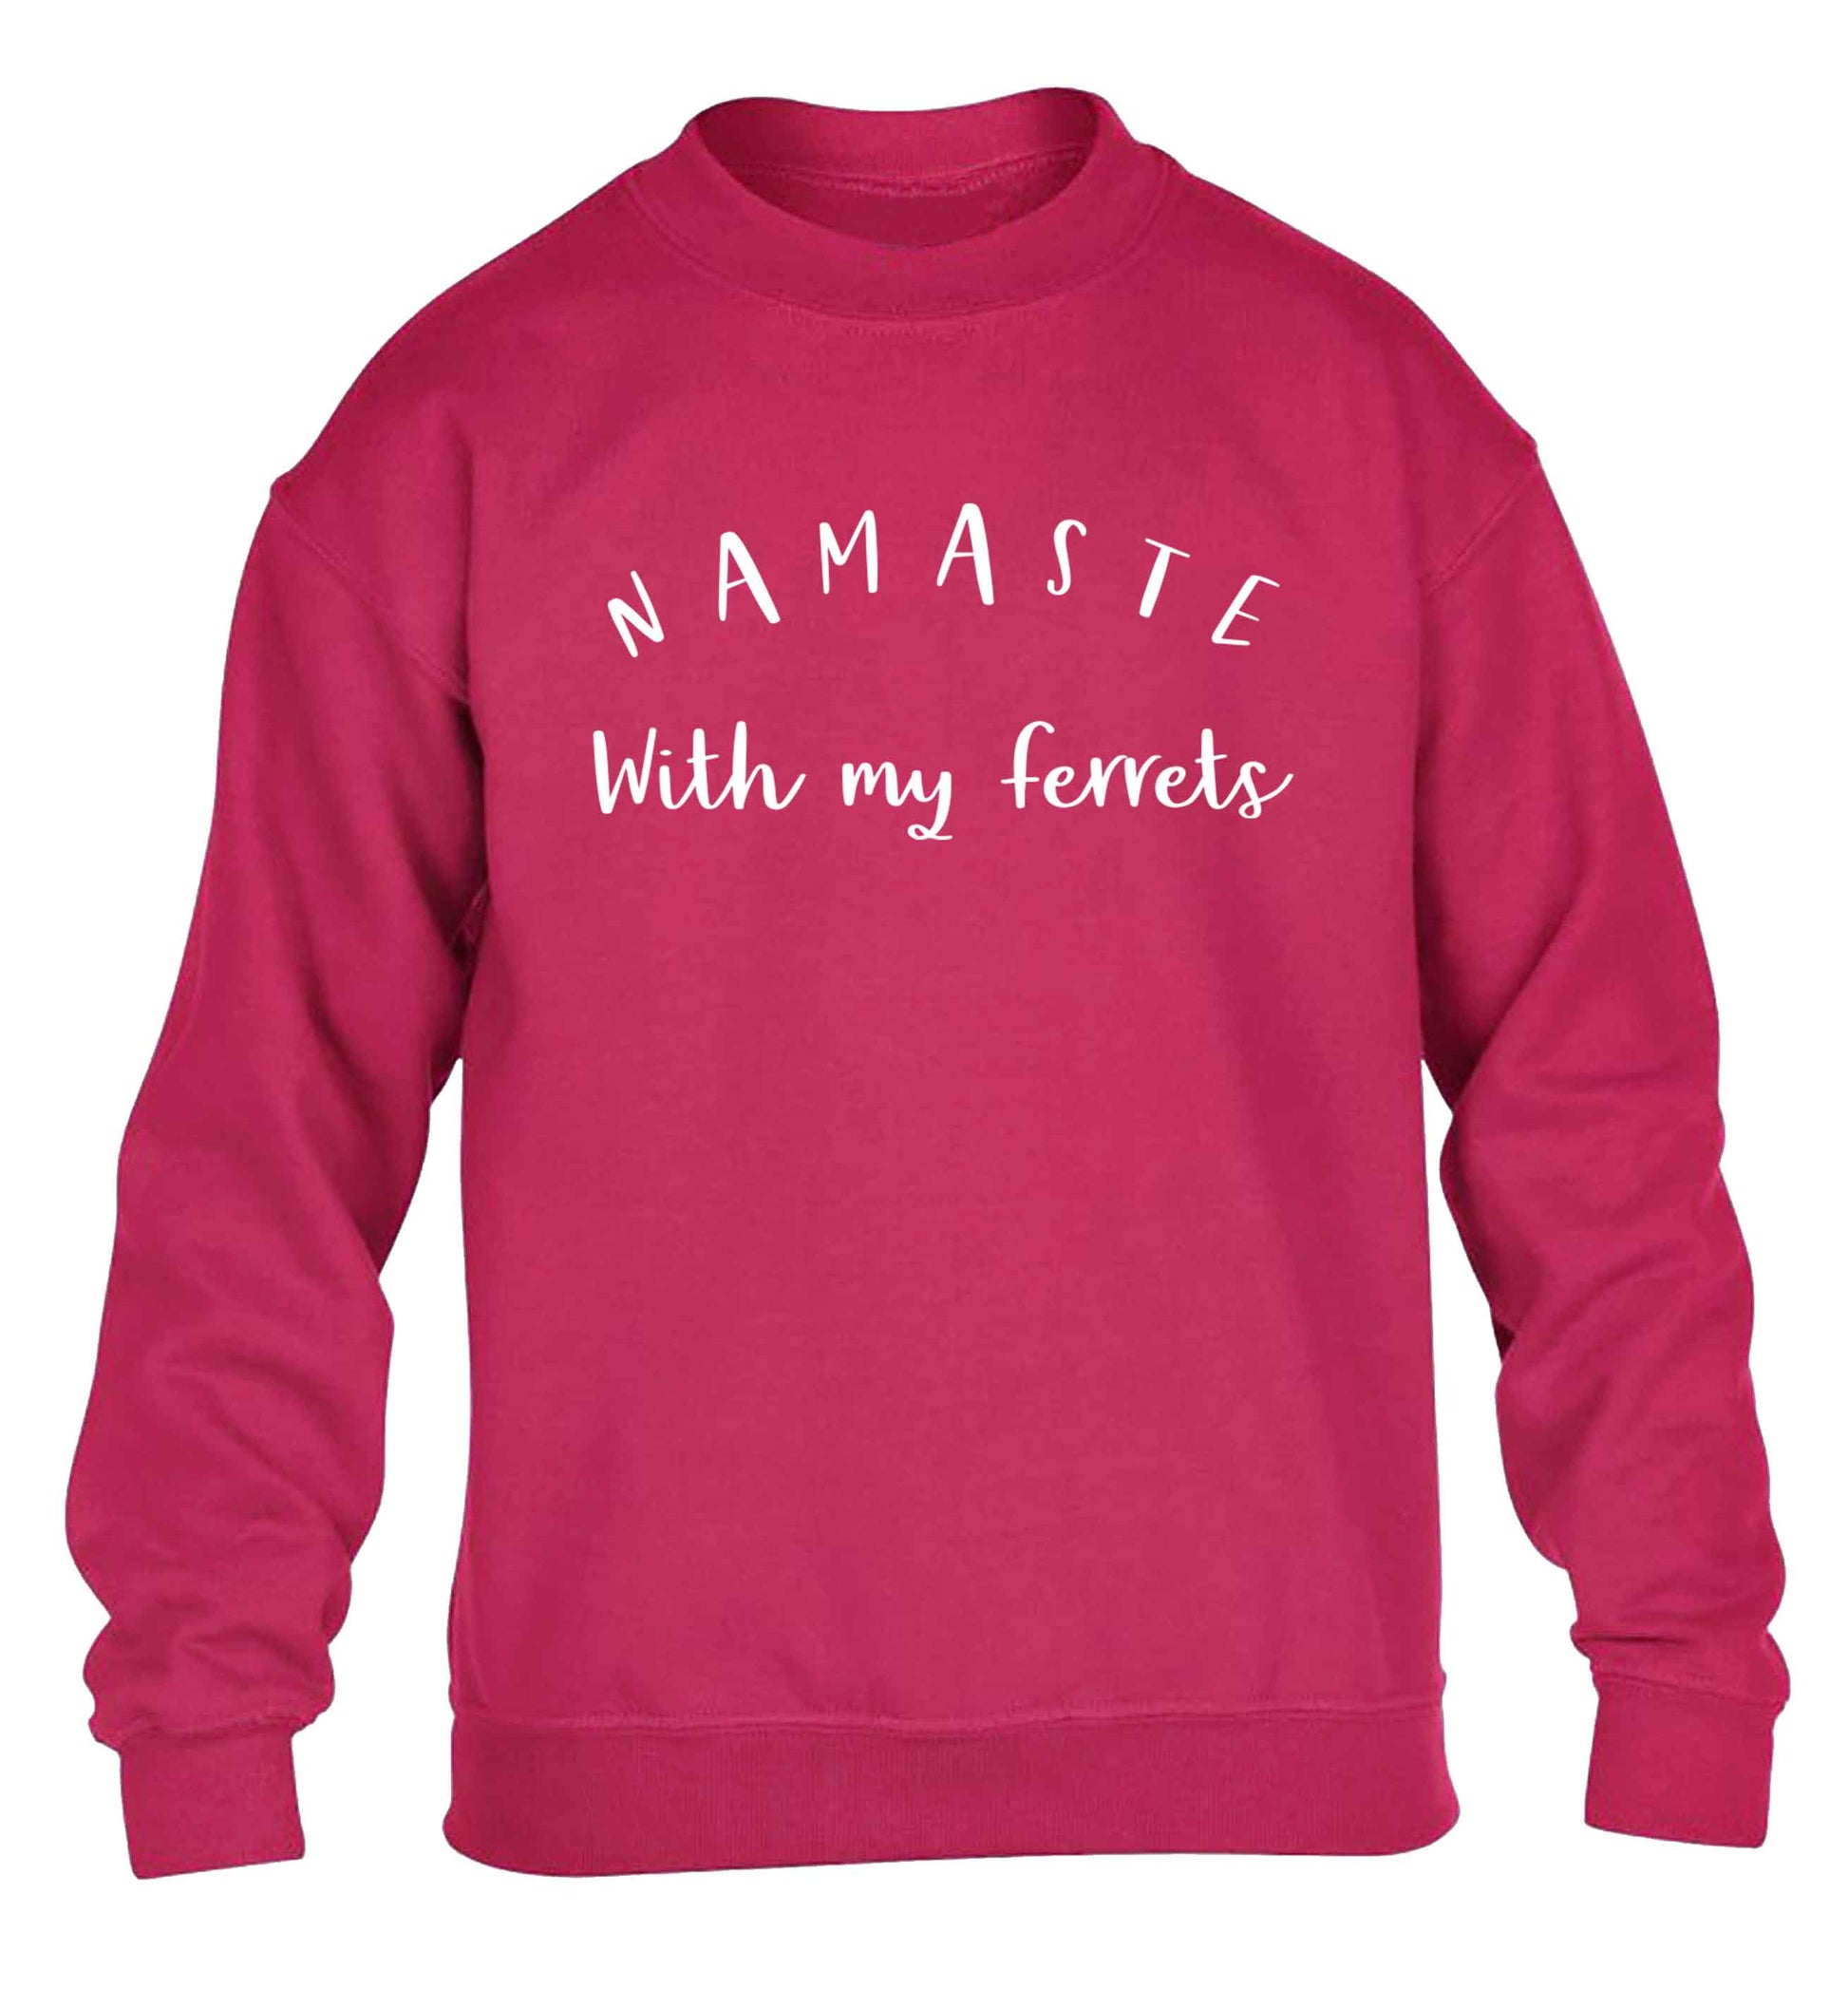 Namaste with my ferrets children's pink sweater 12-13 Years